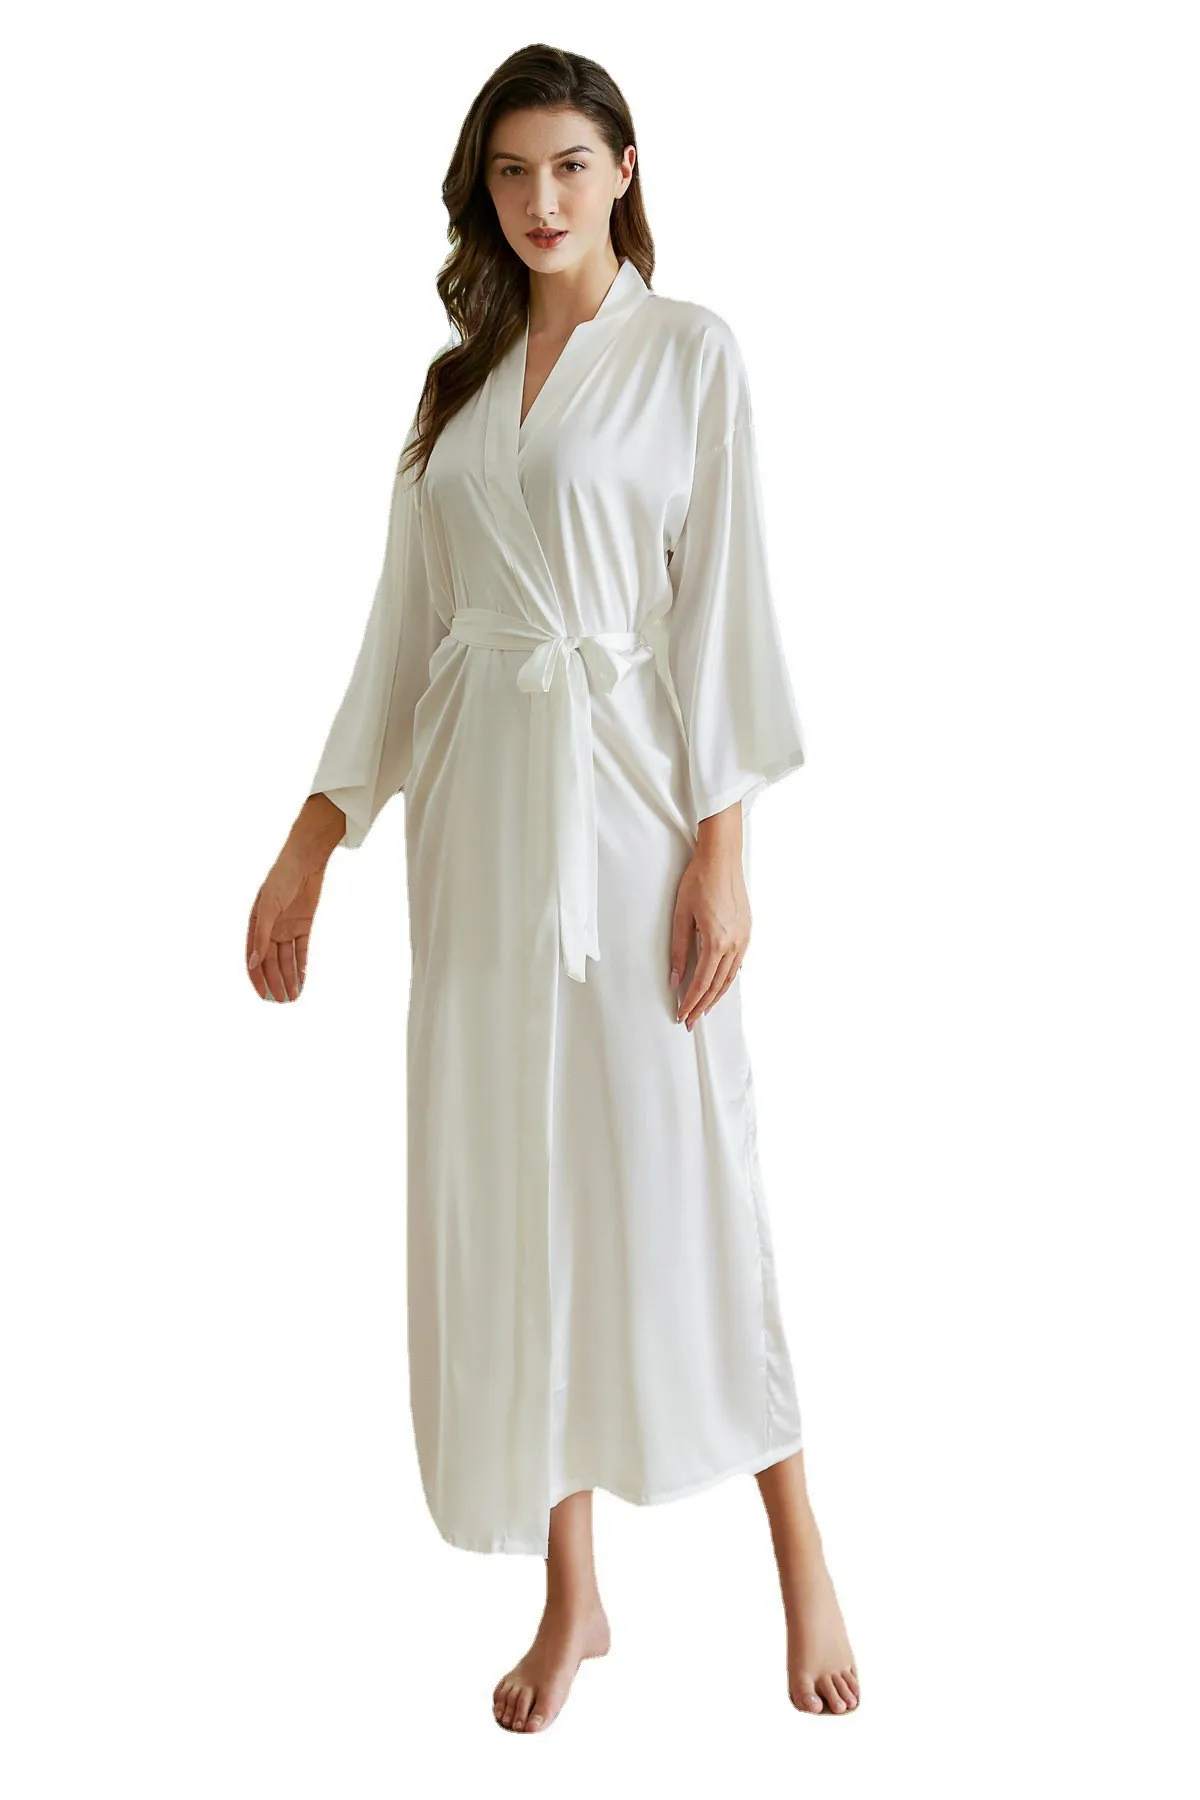 

Robes for Women Nightgowns Ladies Pajamas Long Bathrobe Lace Bridal Dressing Stretch Short Satin Silk Robe Woman Pijamas Dress